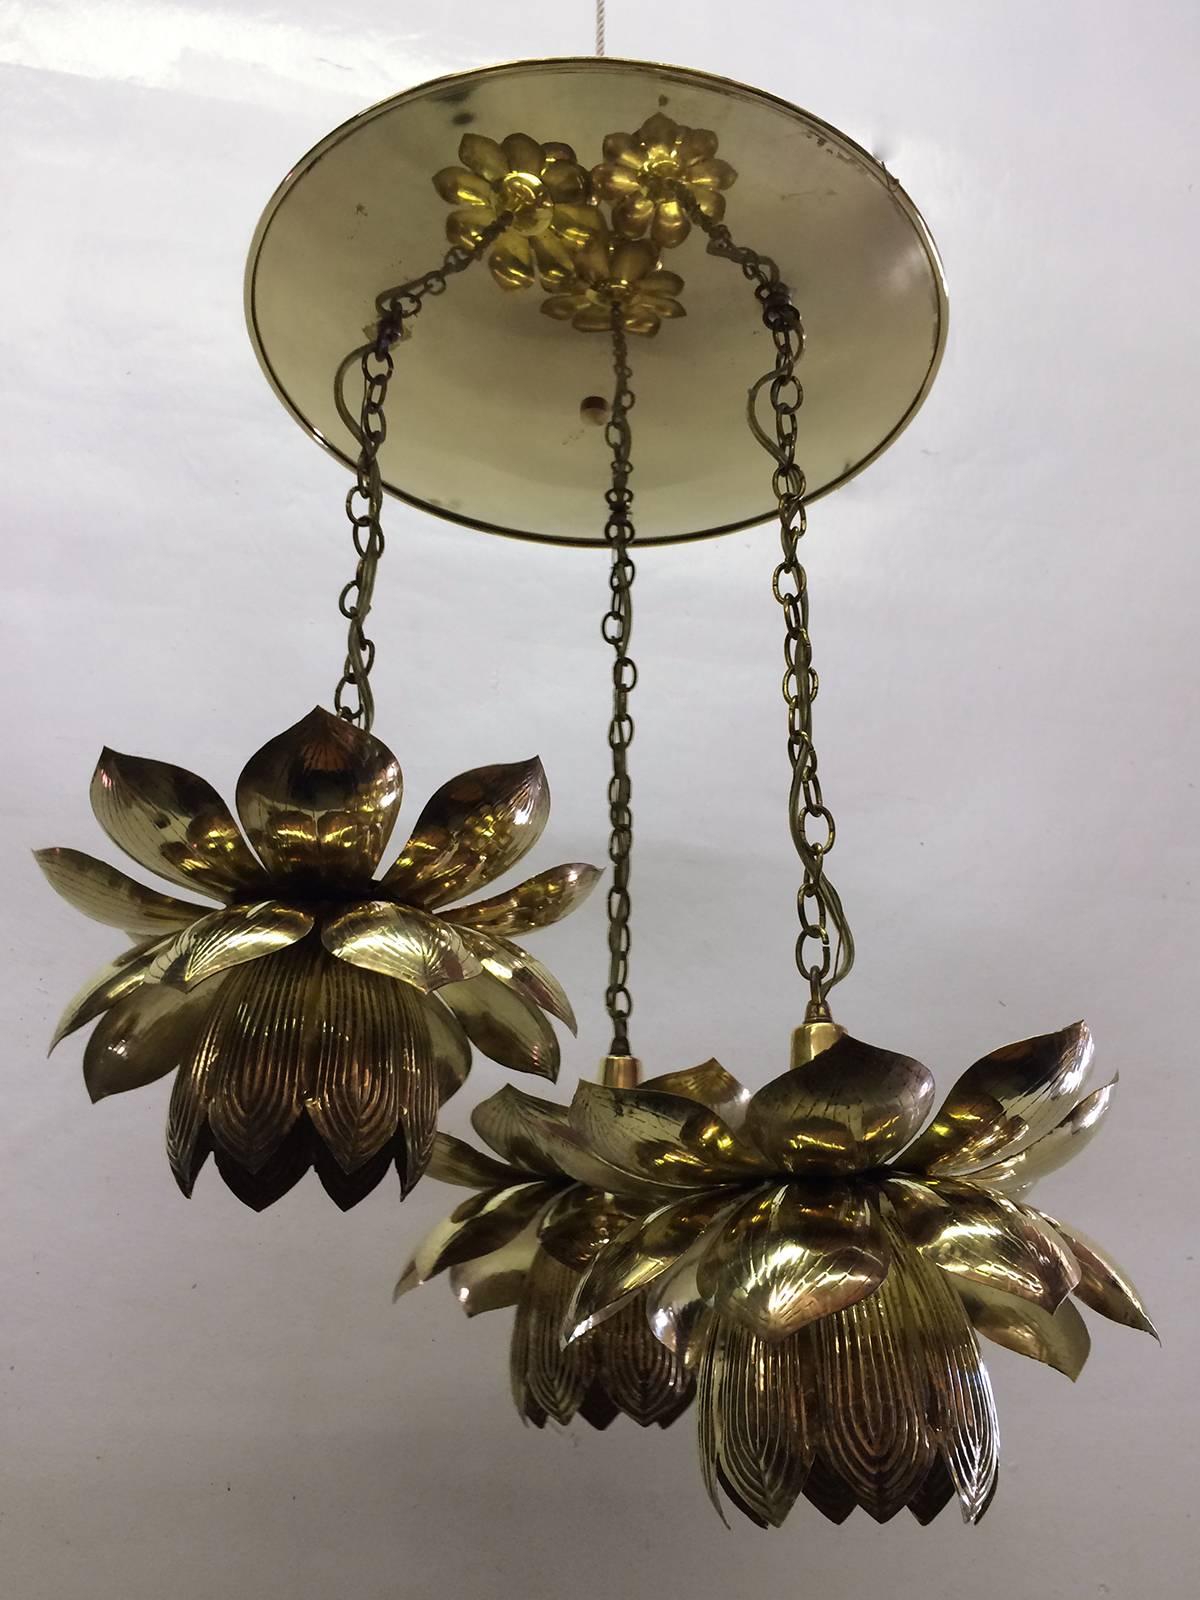 Three pendant light lotus brass chandelier by Feldman.